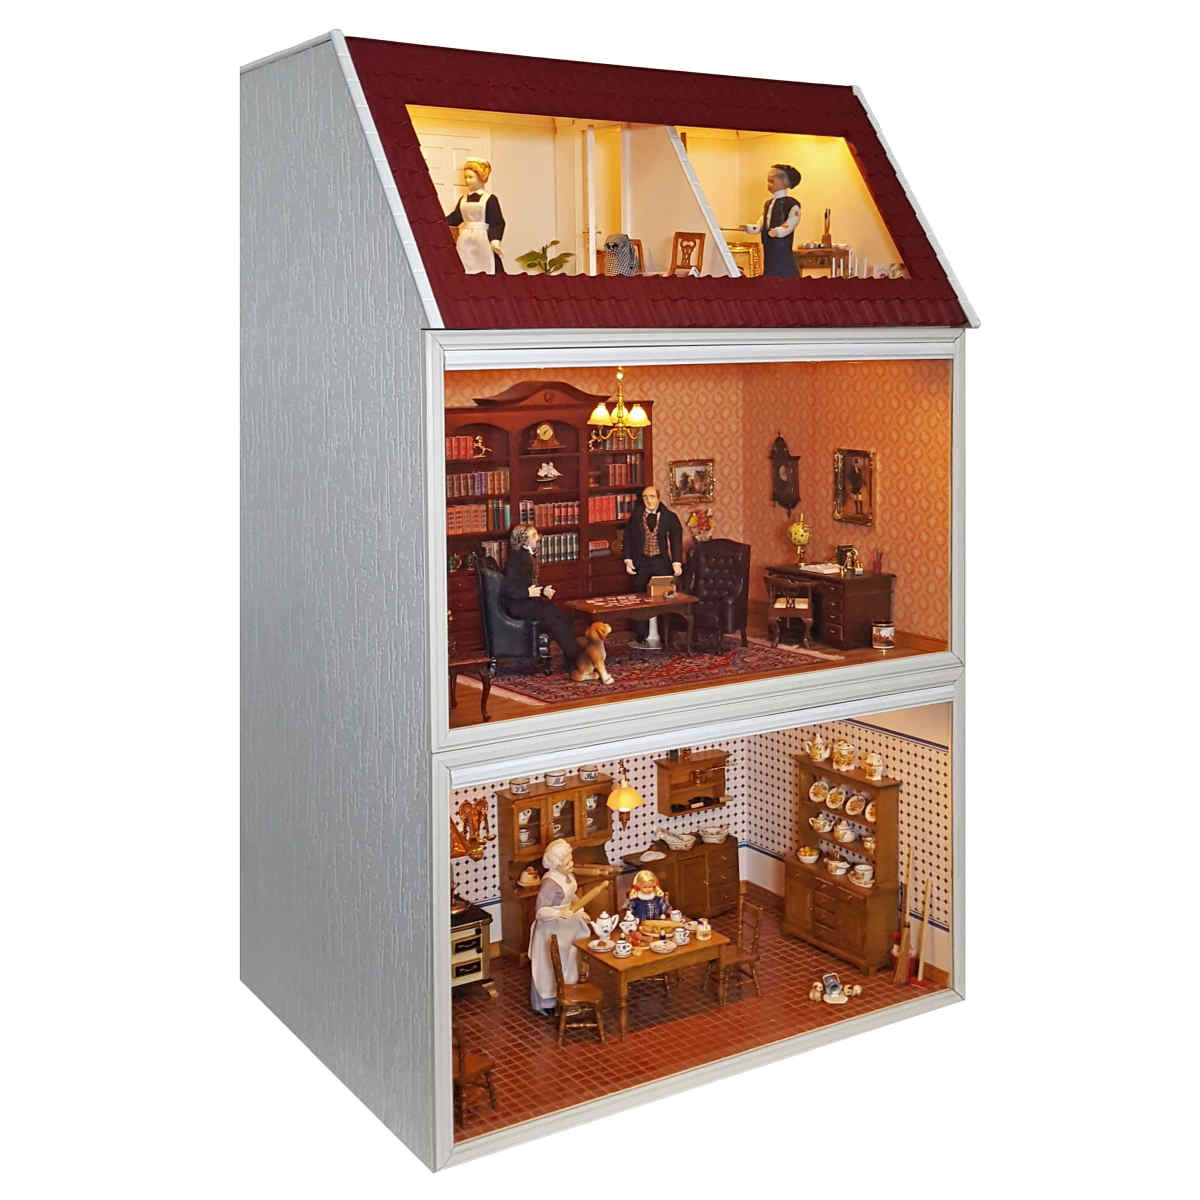 MODULE BOX HOUSE with Top floor and studio window